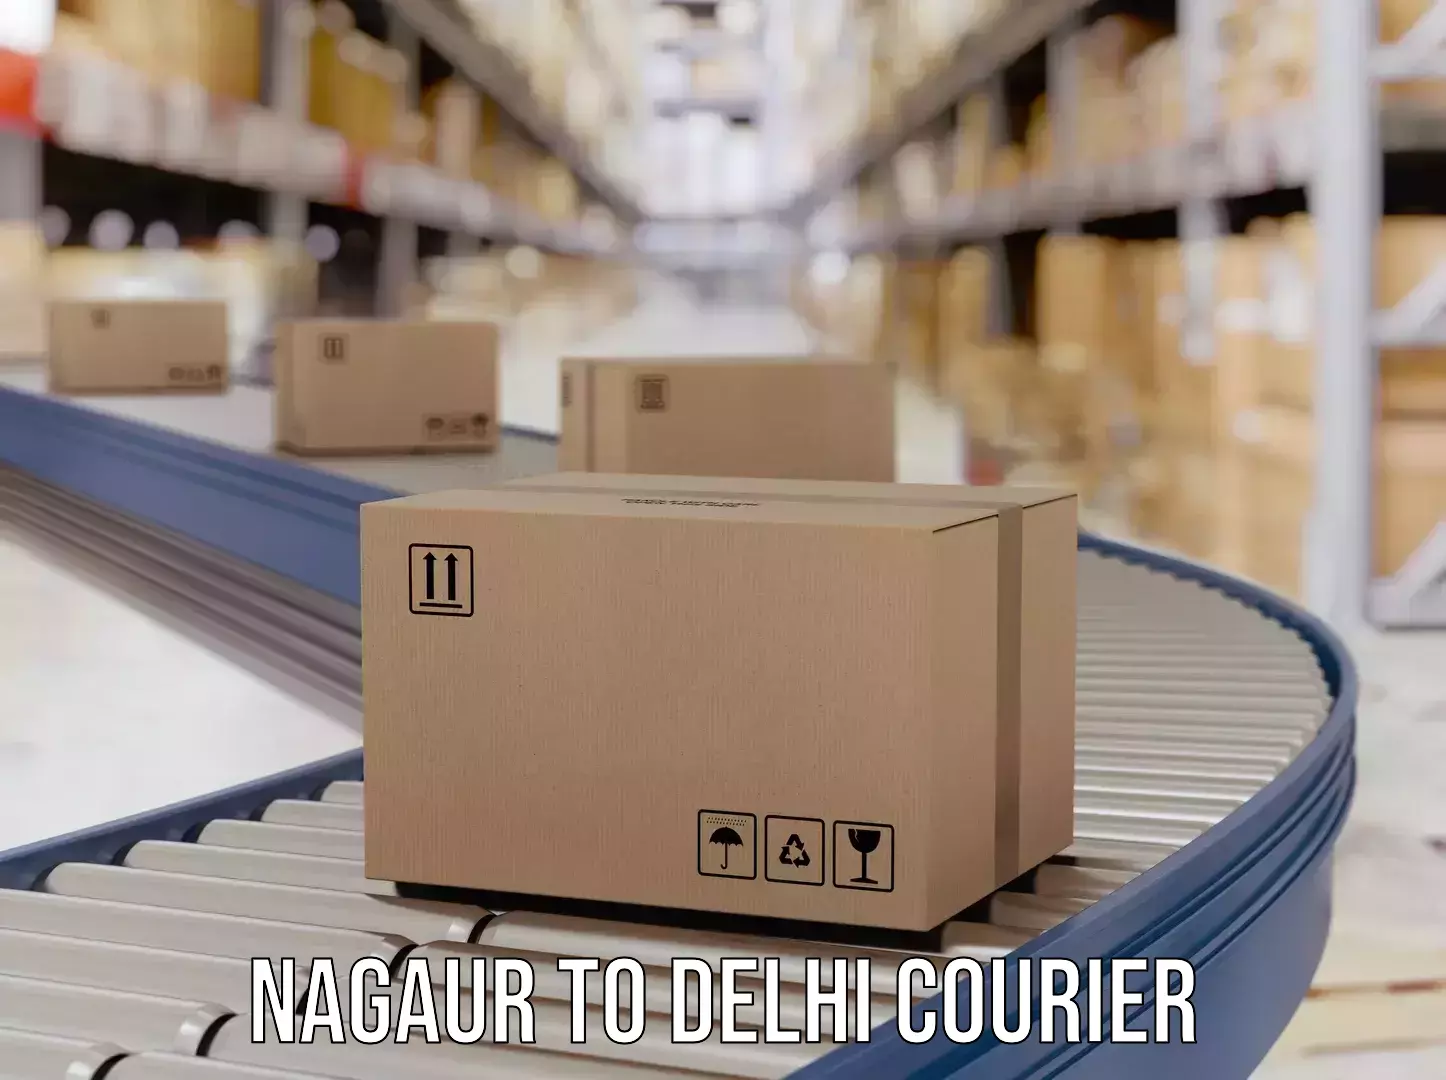 Enhanced tracking features Nagaur to University of Delhi